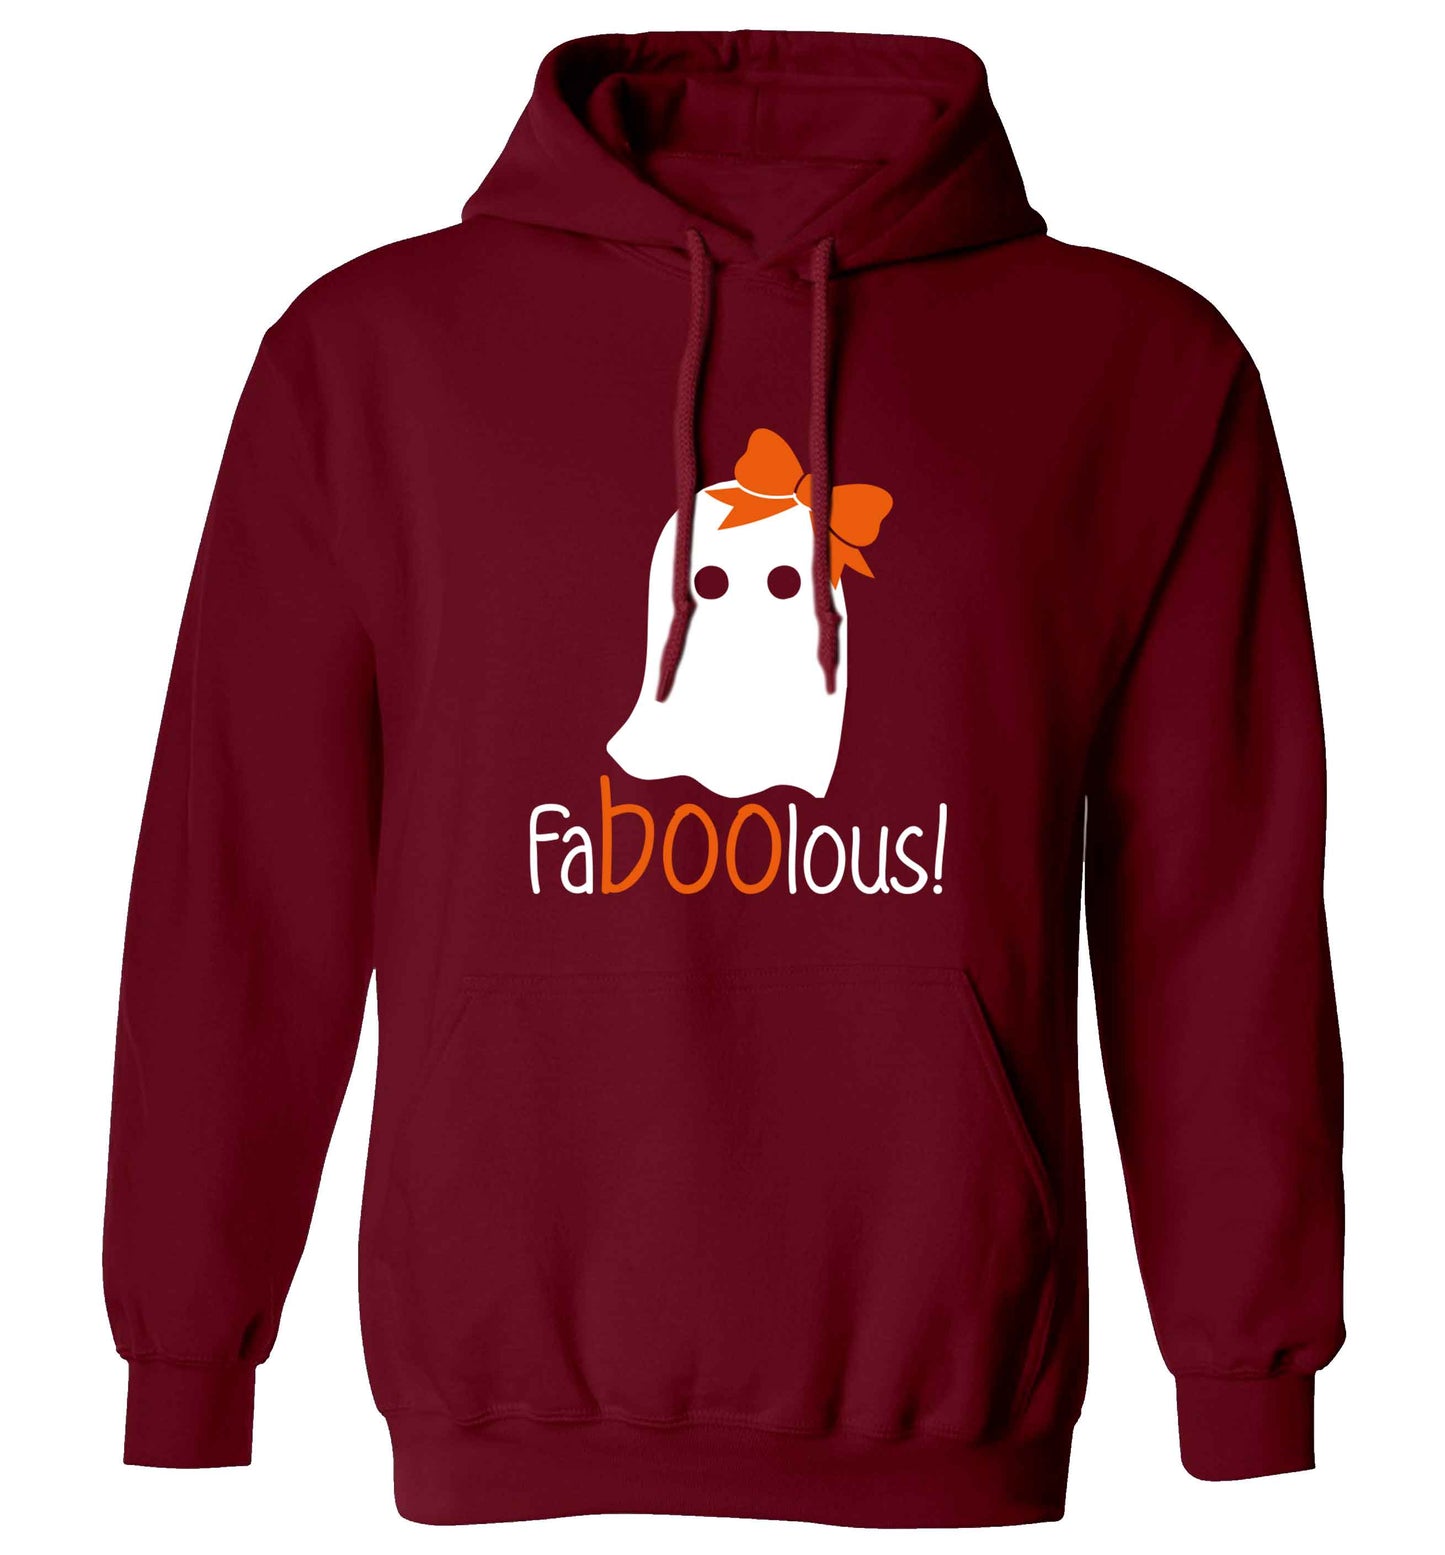 Faboolous ghost adults unisex maroon hoodie 2XL